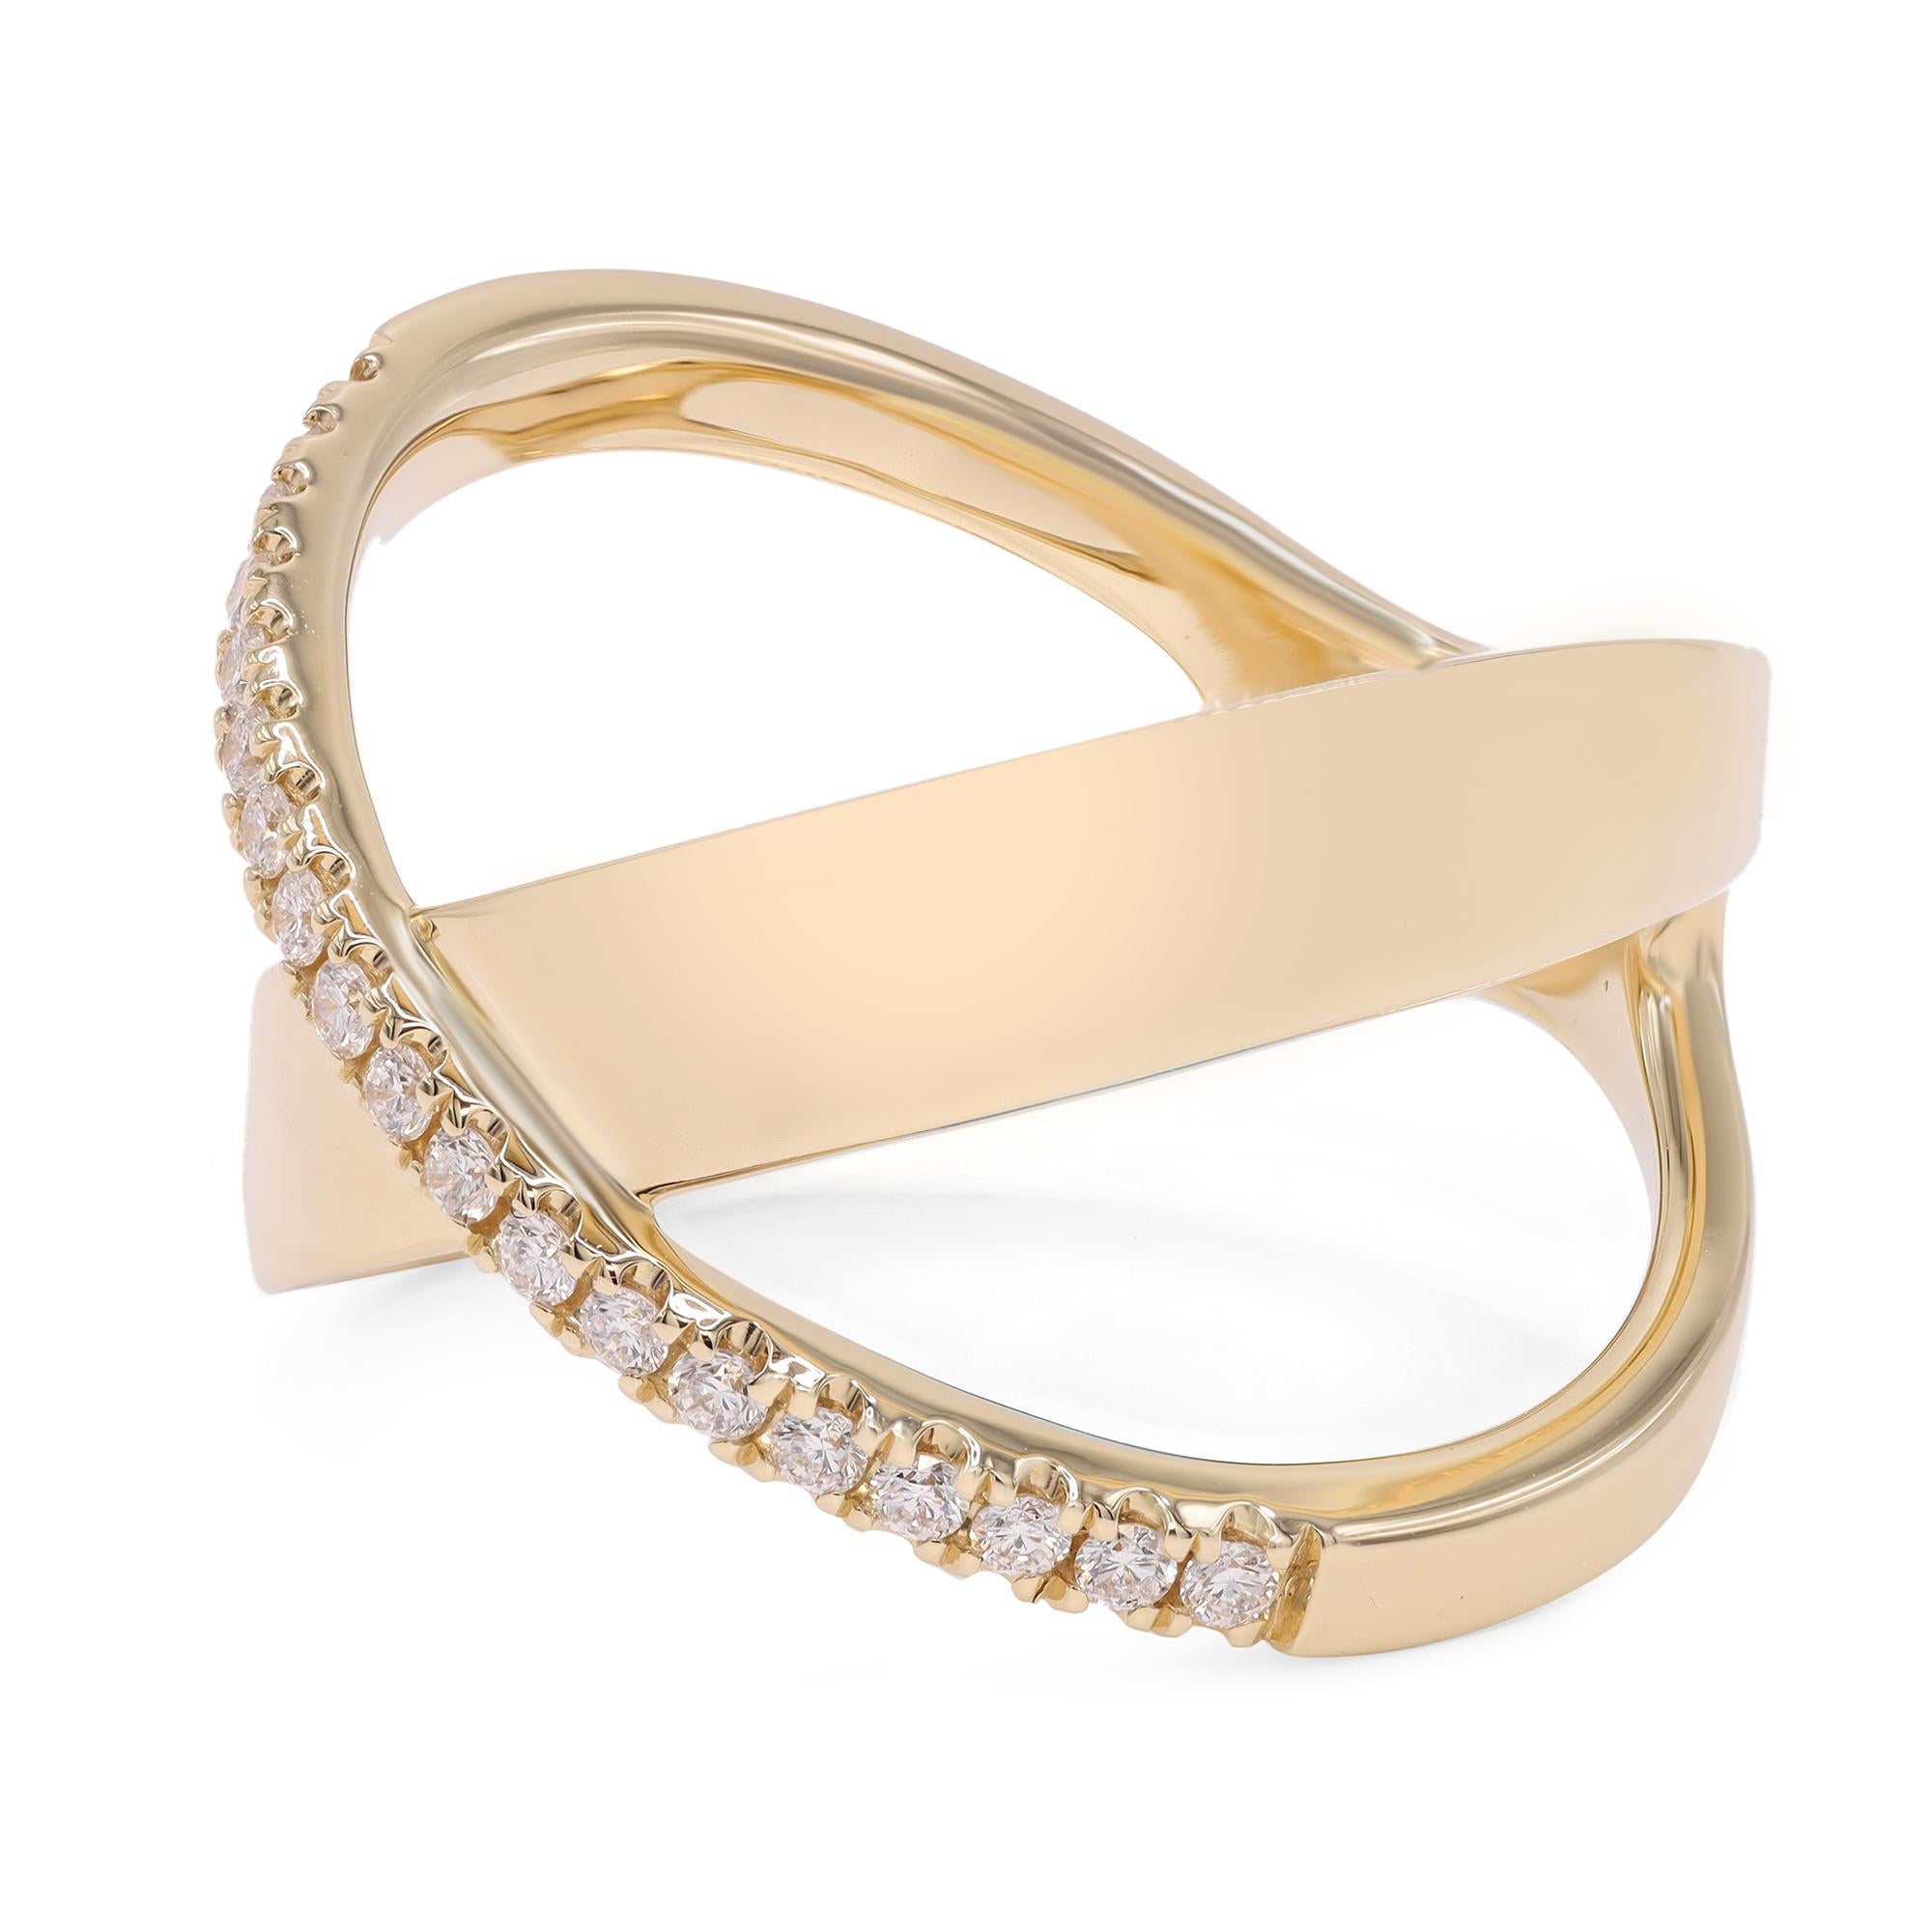 Modern Rachel Koen Pave Diamond X Ring Band 14K Yellow Gold 0.19Cttw Size 7 For Sale